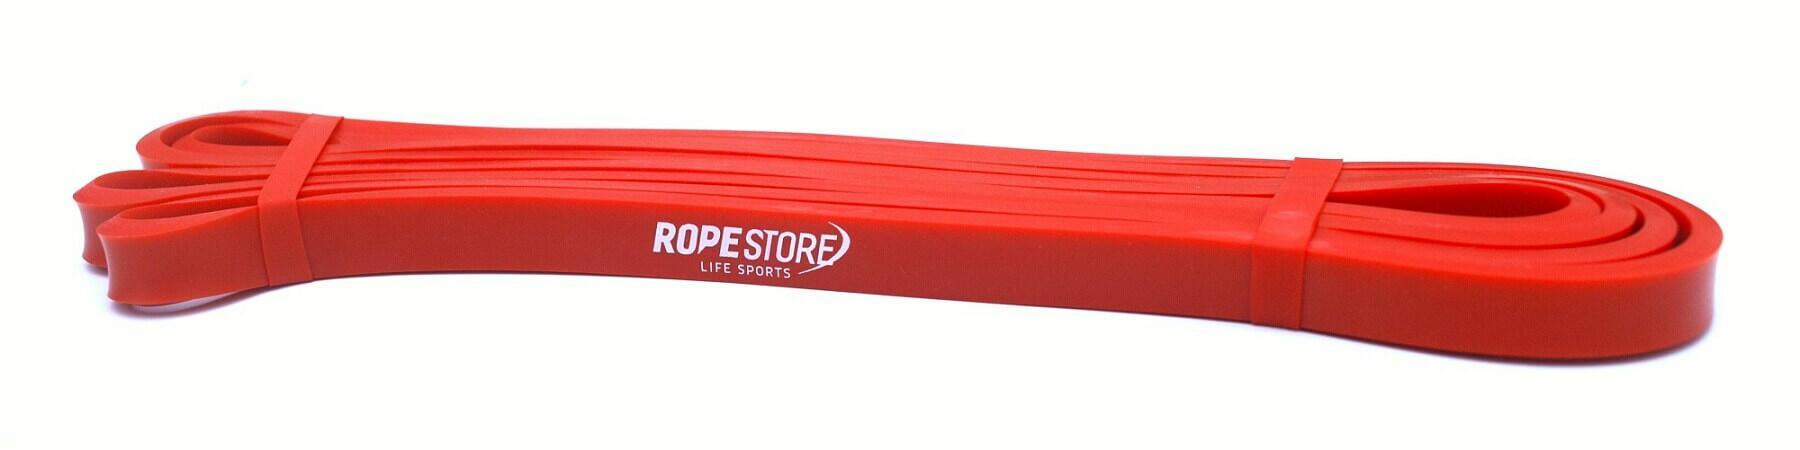 Super Band Super Leve, Vermelha, Rope Store 1.3